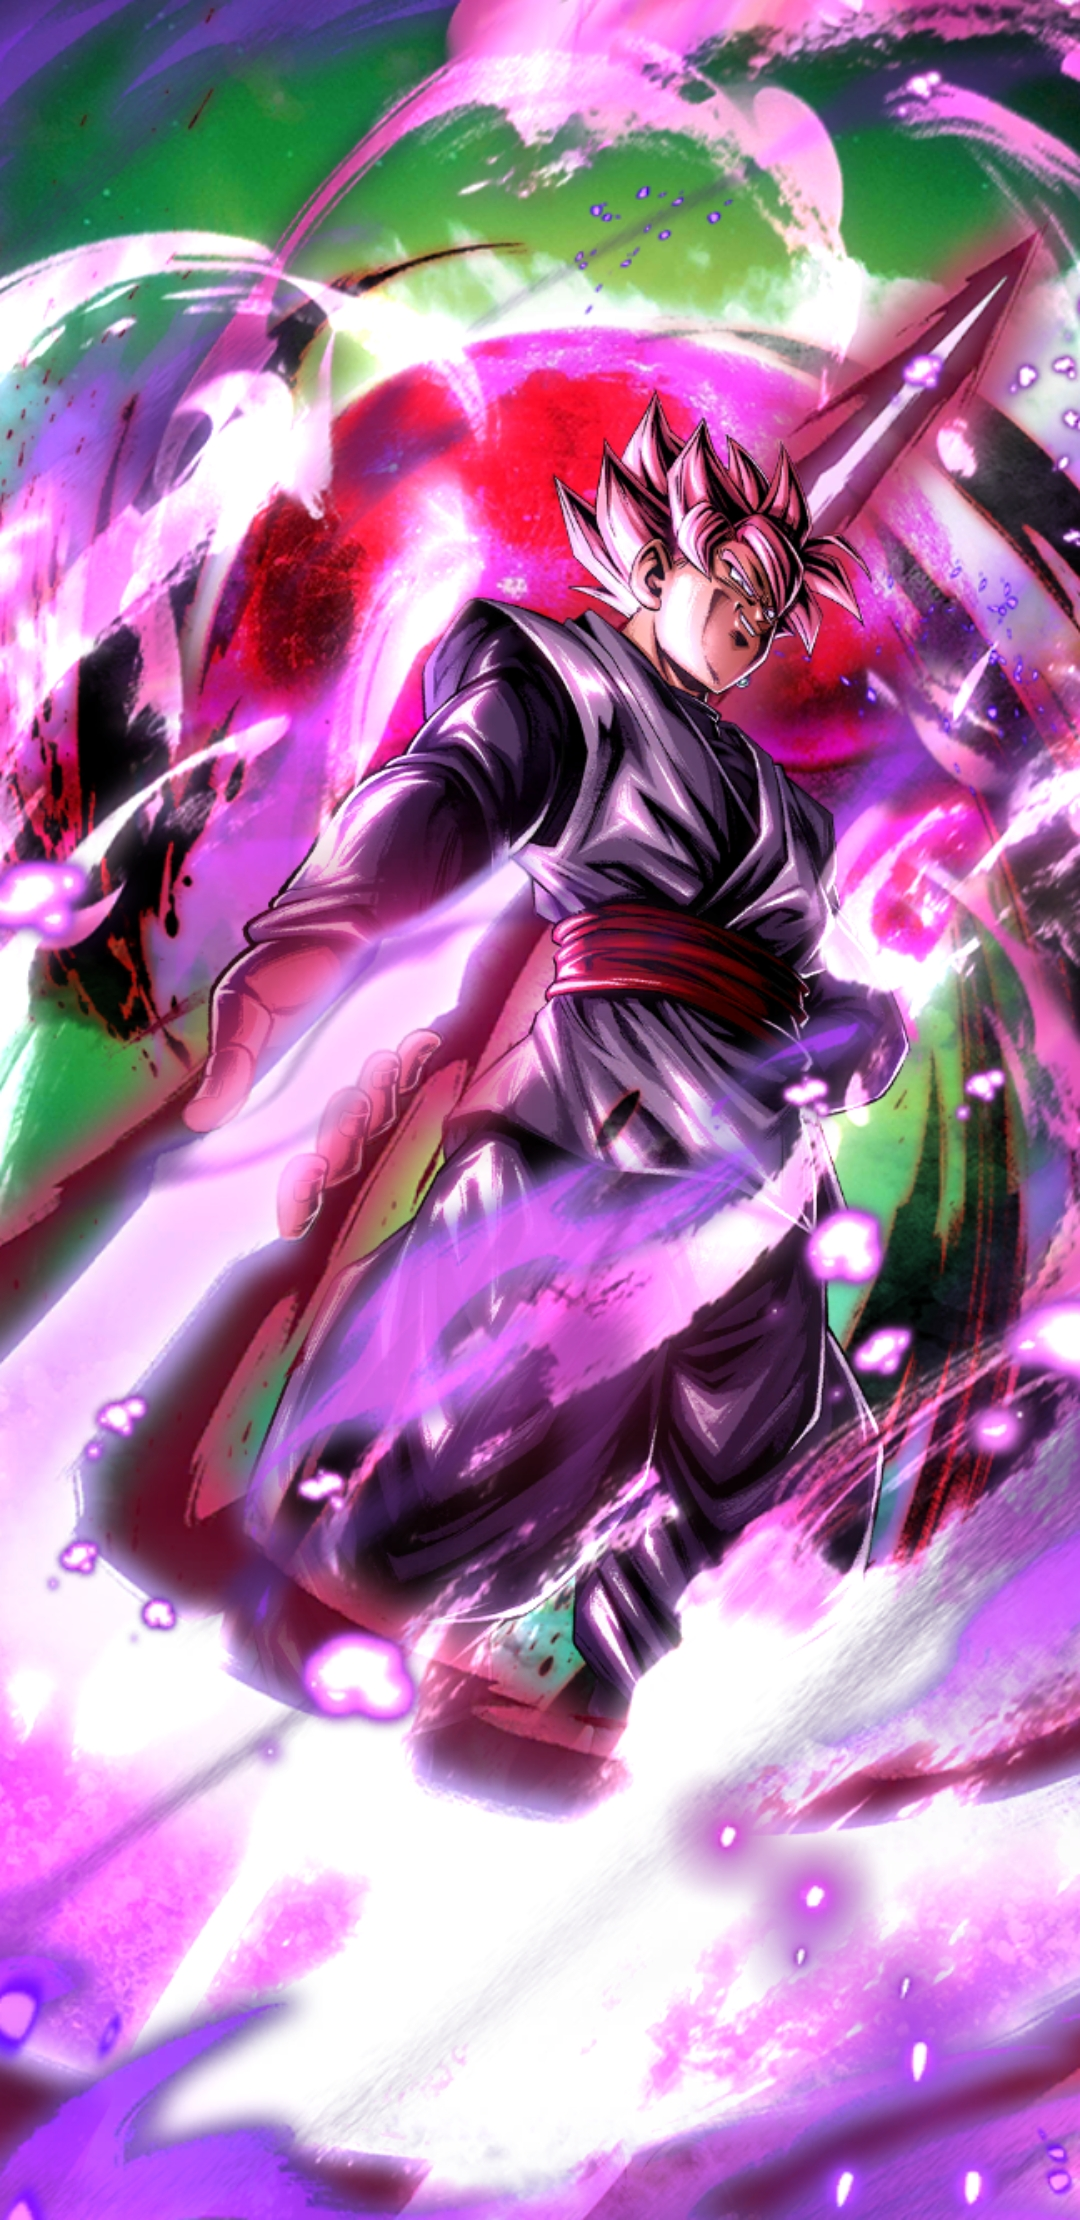 Goku black with scythe : r/DragonballLegends